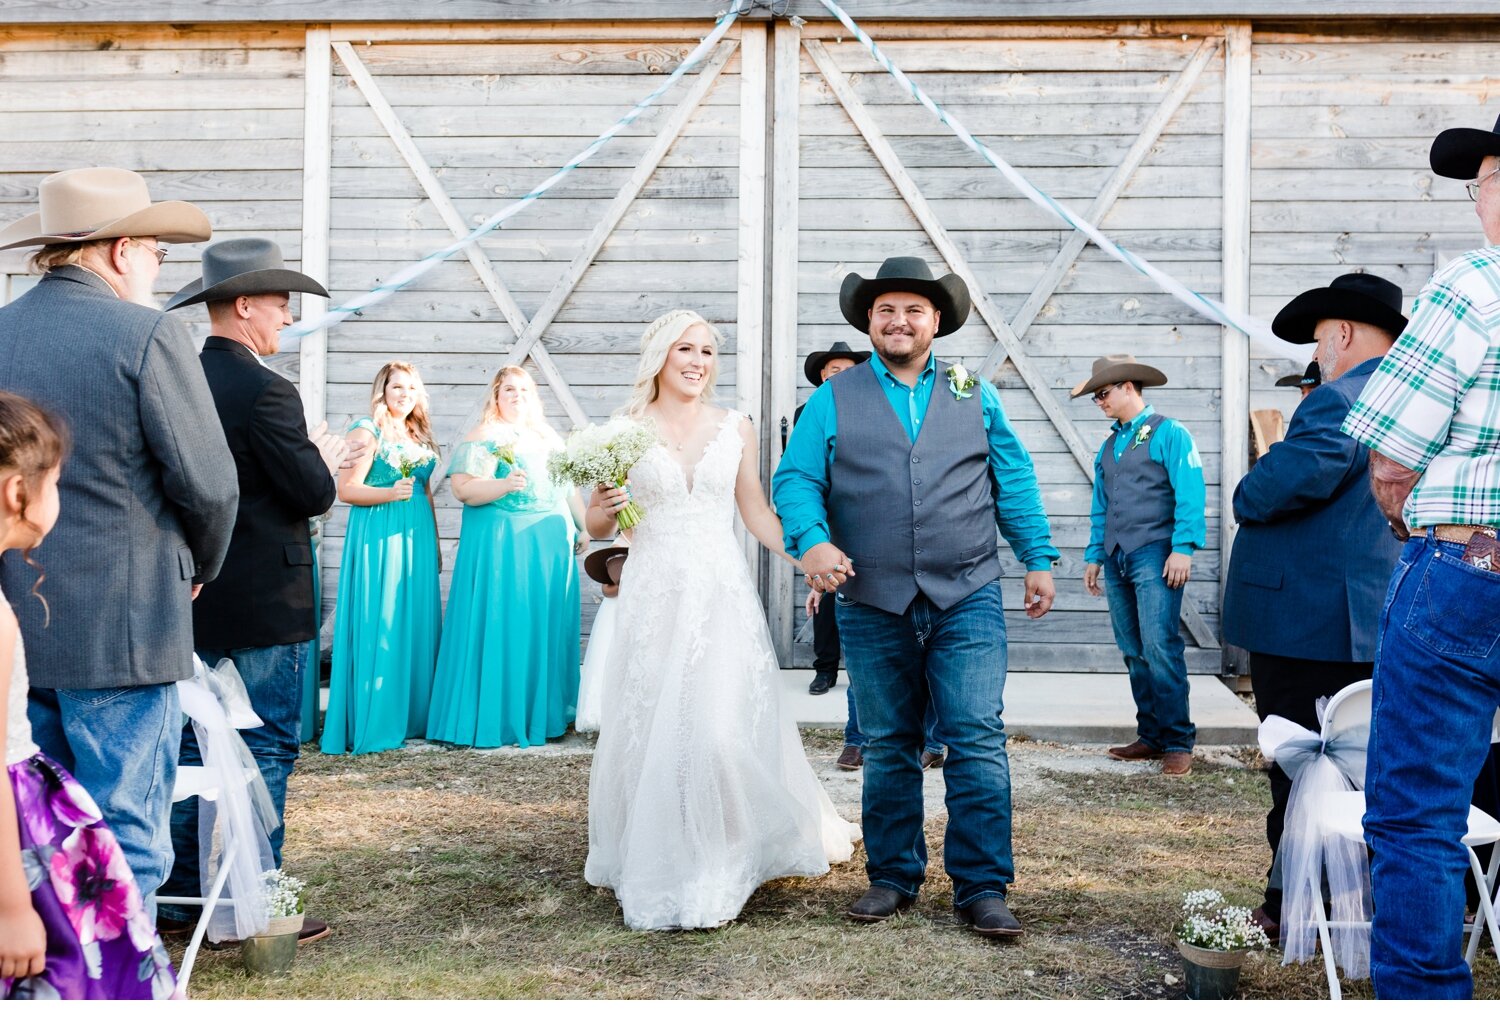 Destinnee + Chance Rustic Barn Wedding at Elm Creek Ranch_0053.jpg